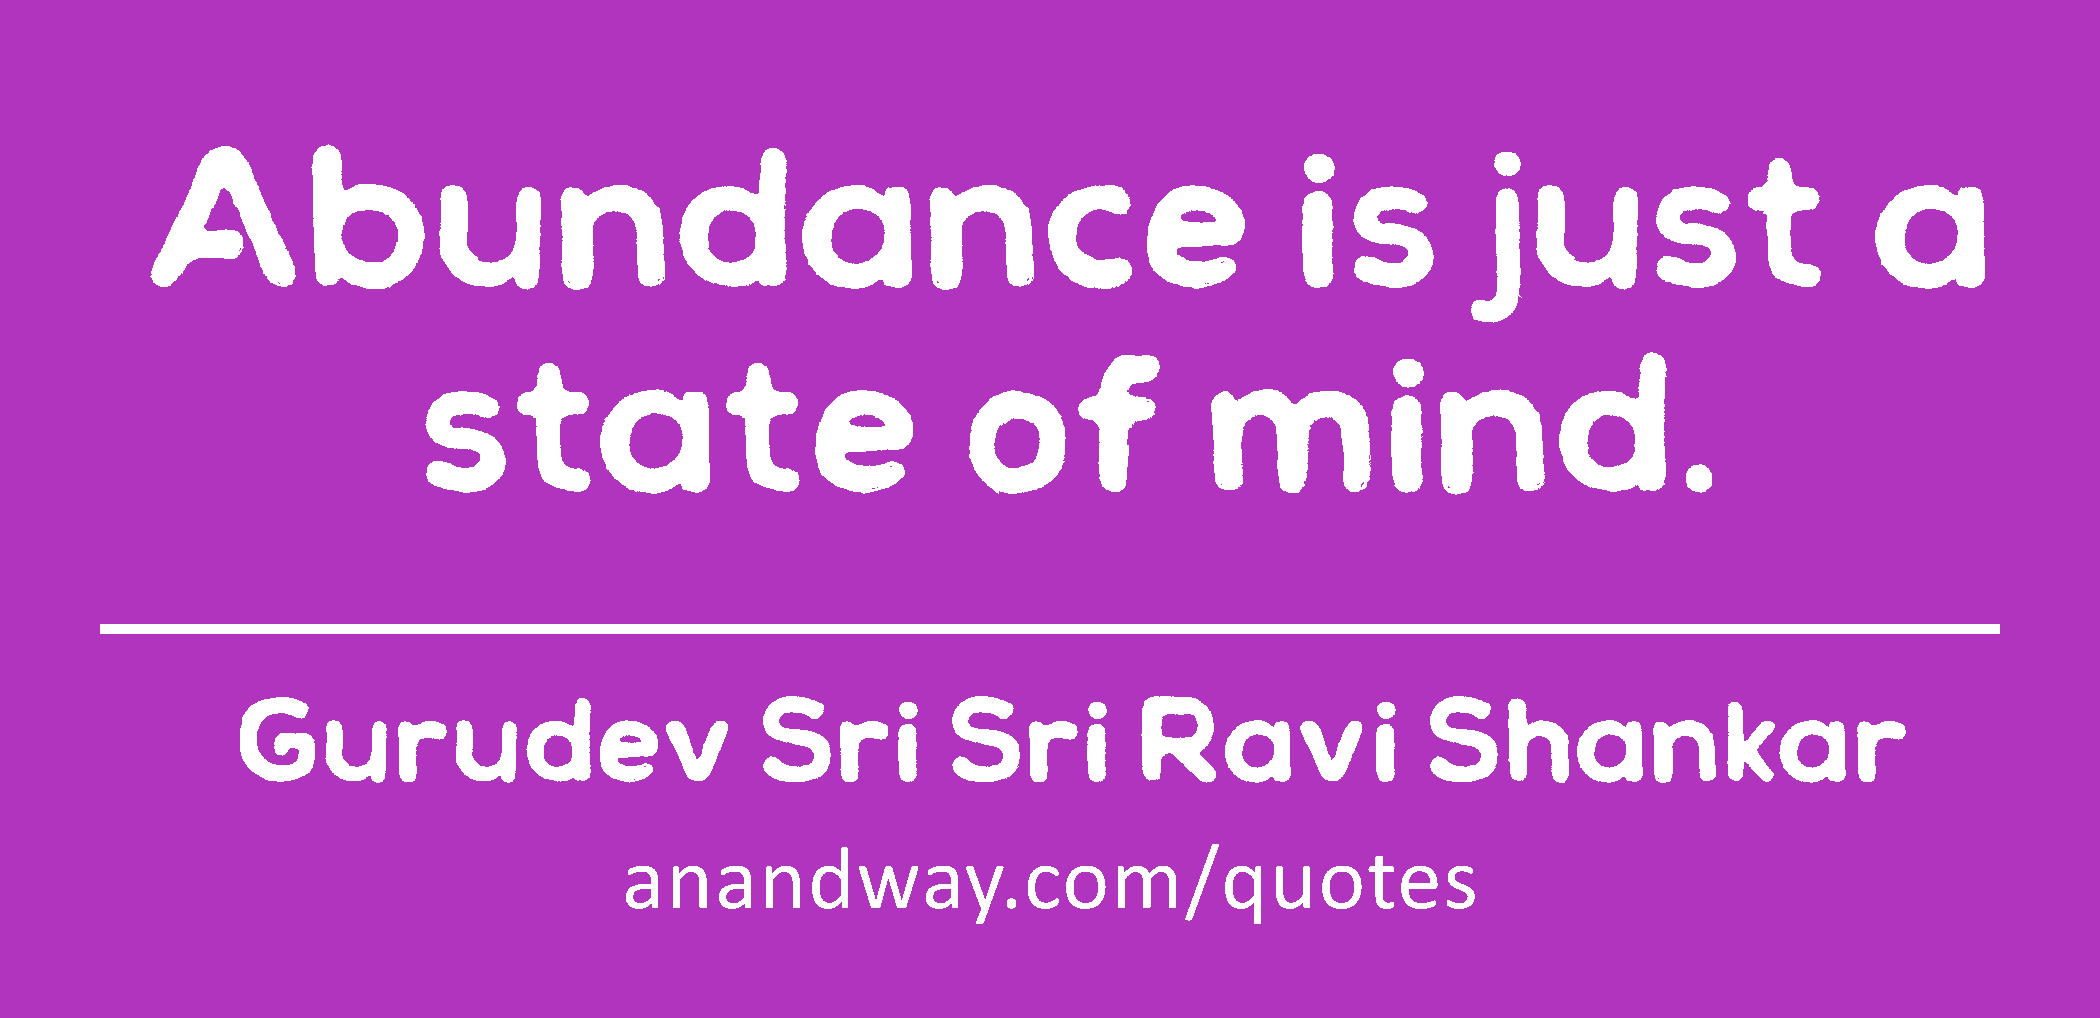 Abundance is just a state of mind. 
 -Gurudev Sri Sri Ravi Shankar